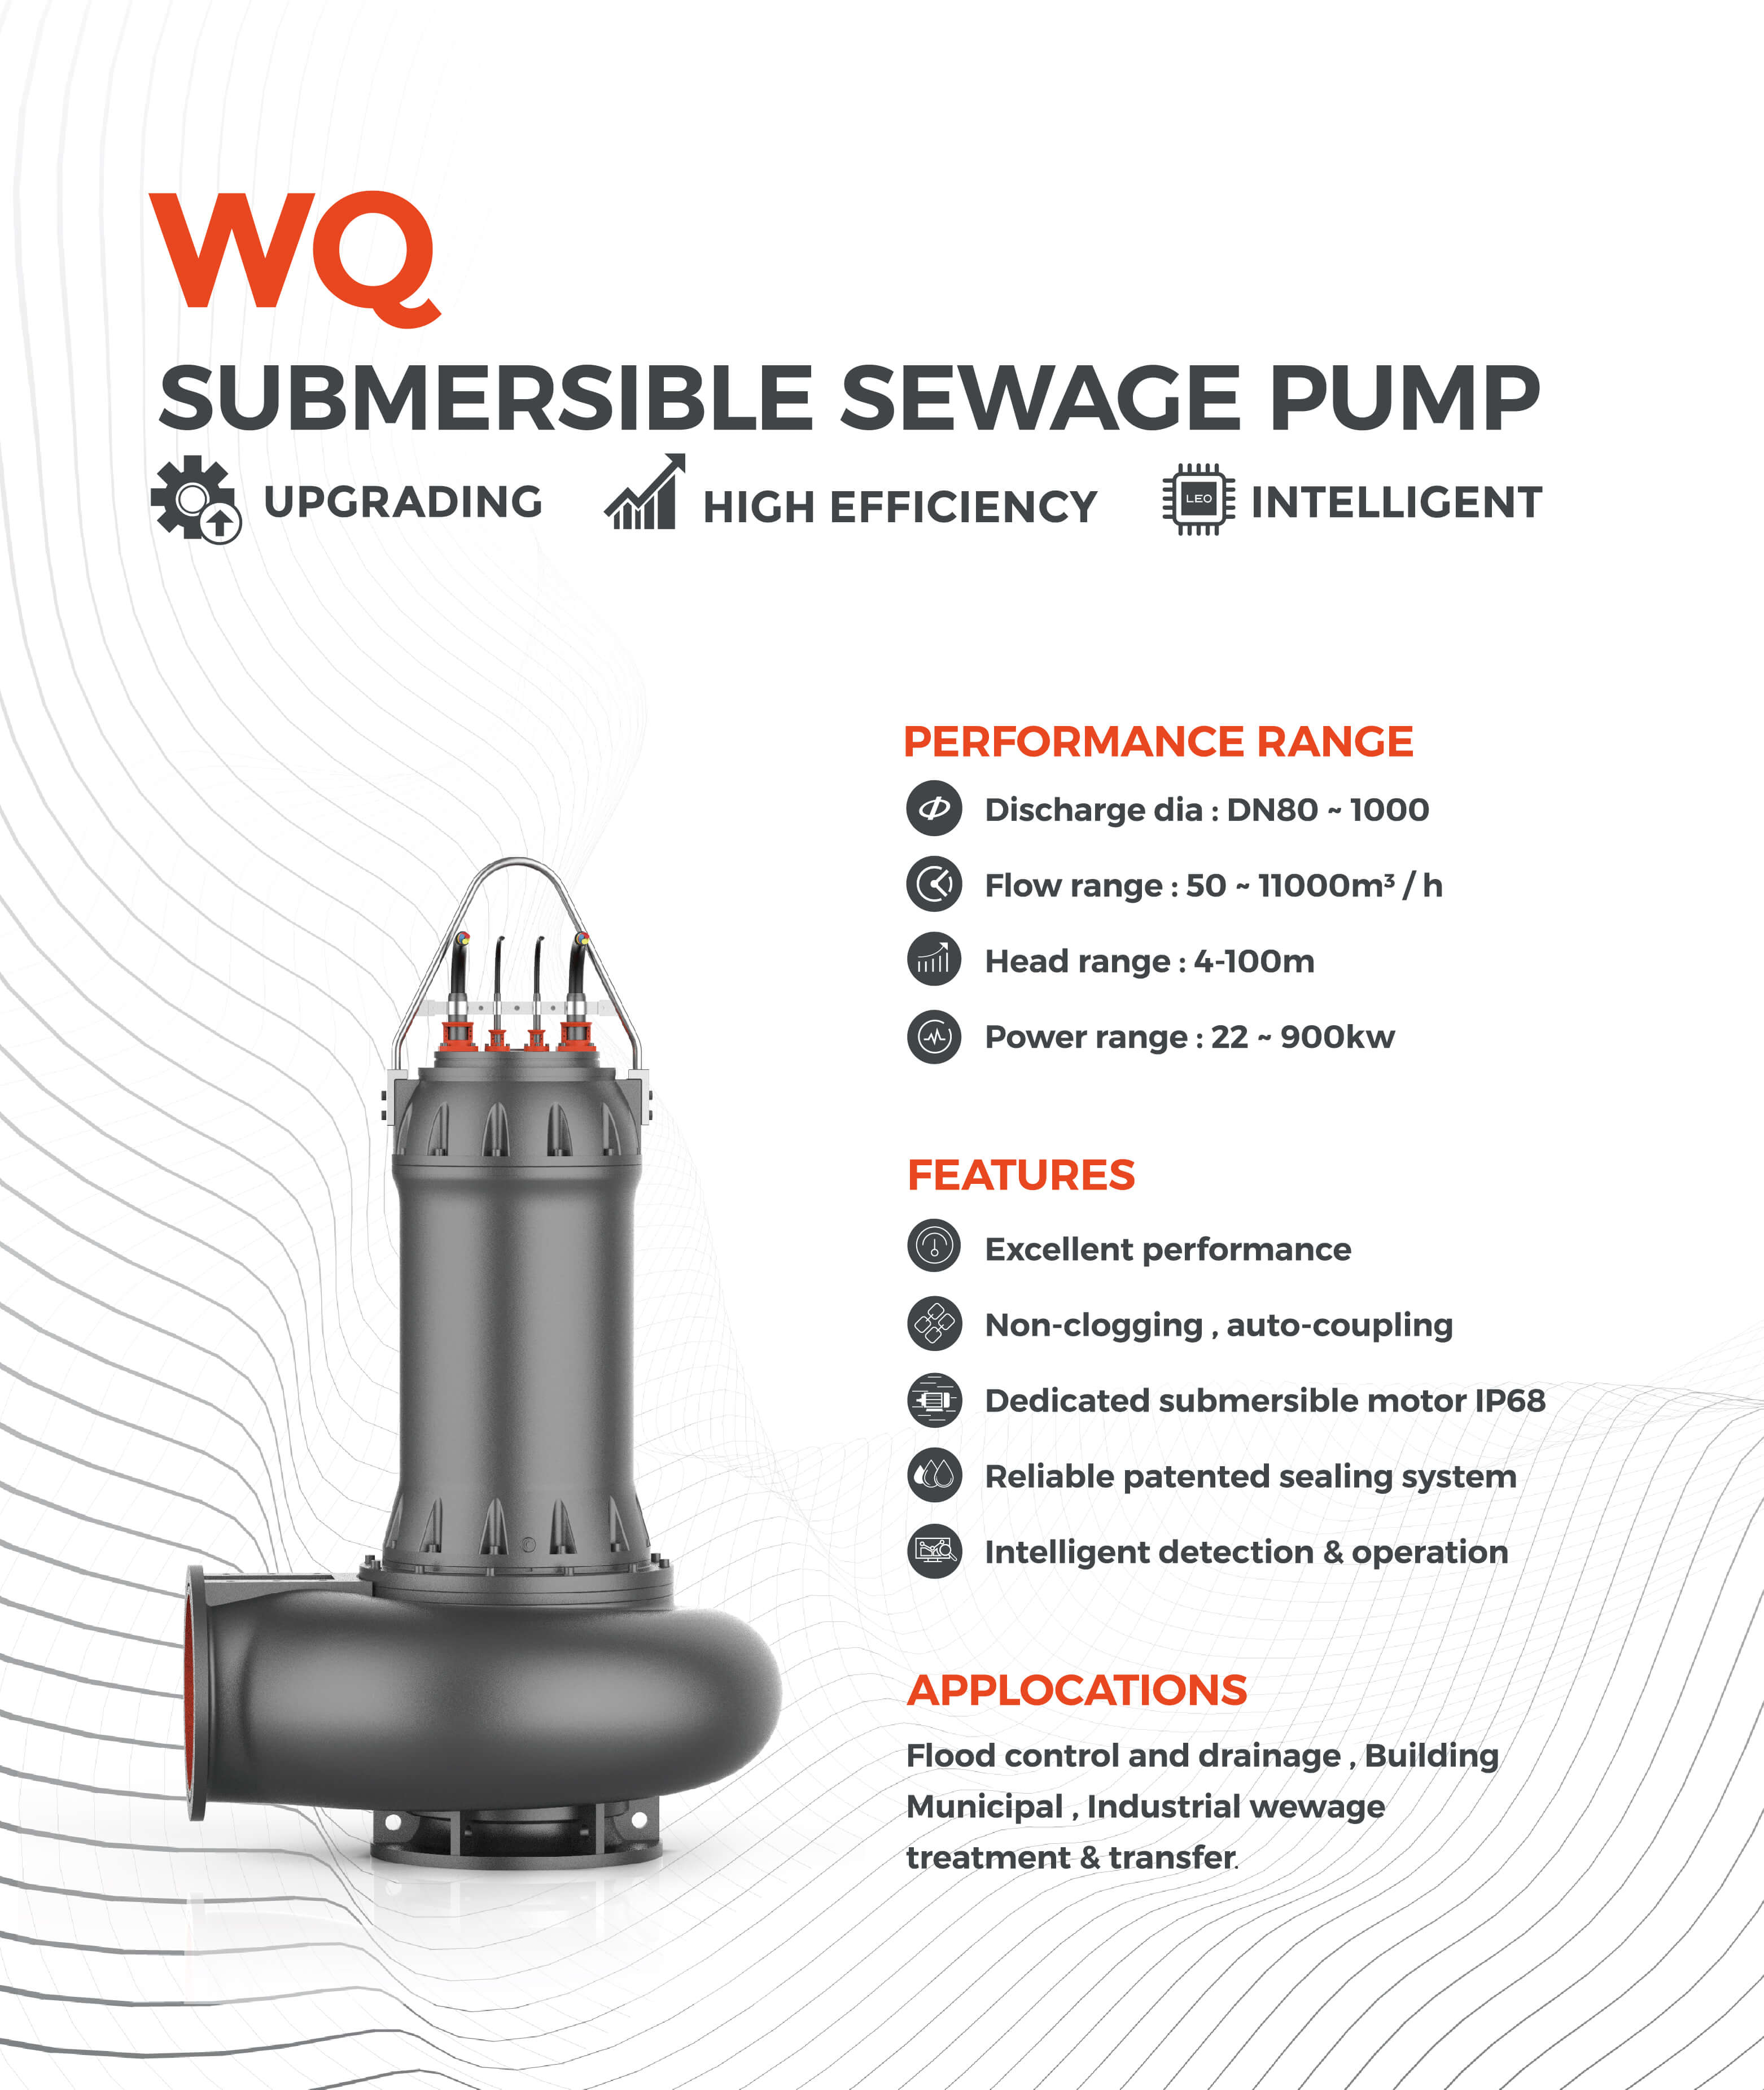 WQ Submersible Sewage Pump Features